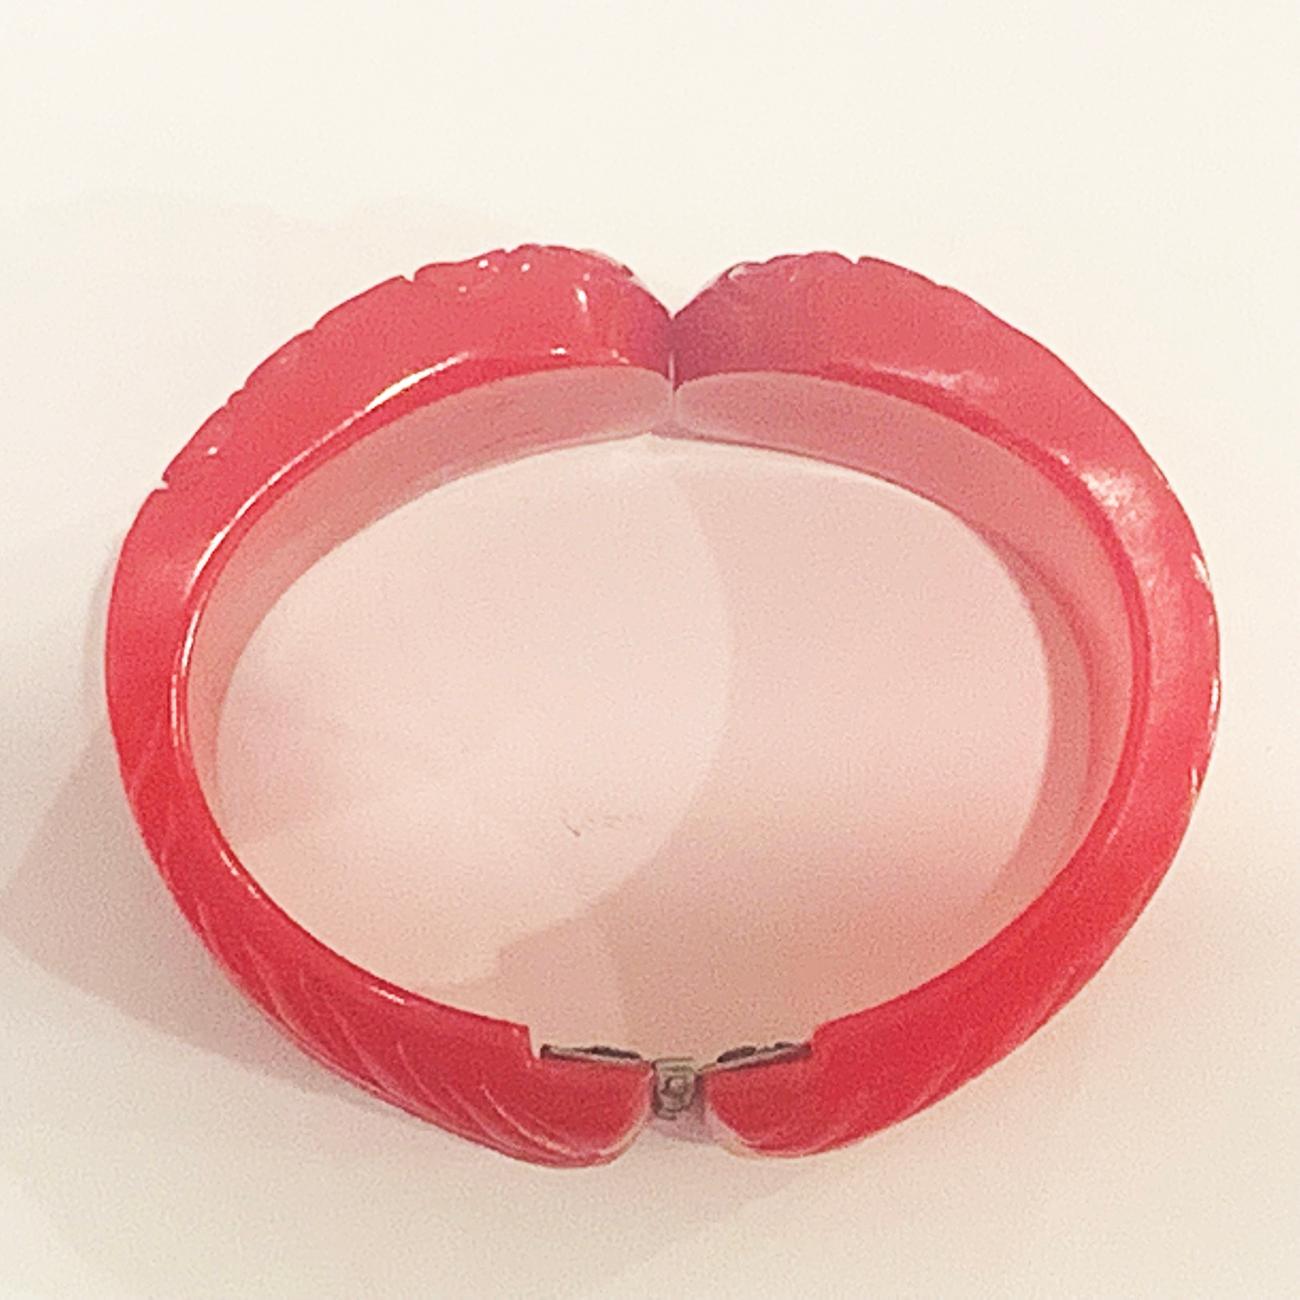 Art Deco heavily carved Lipstick red clamper hinged bangle bracelet 1